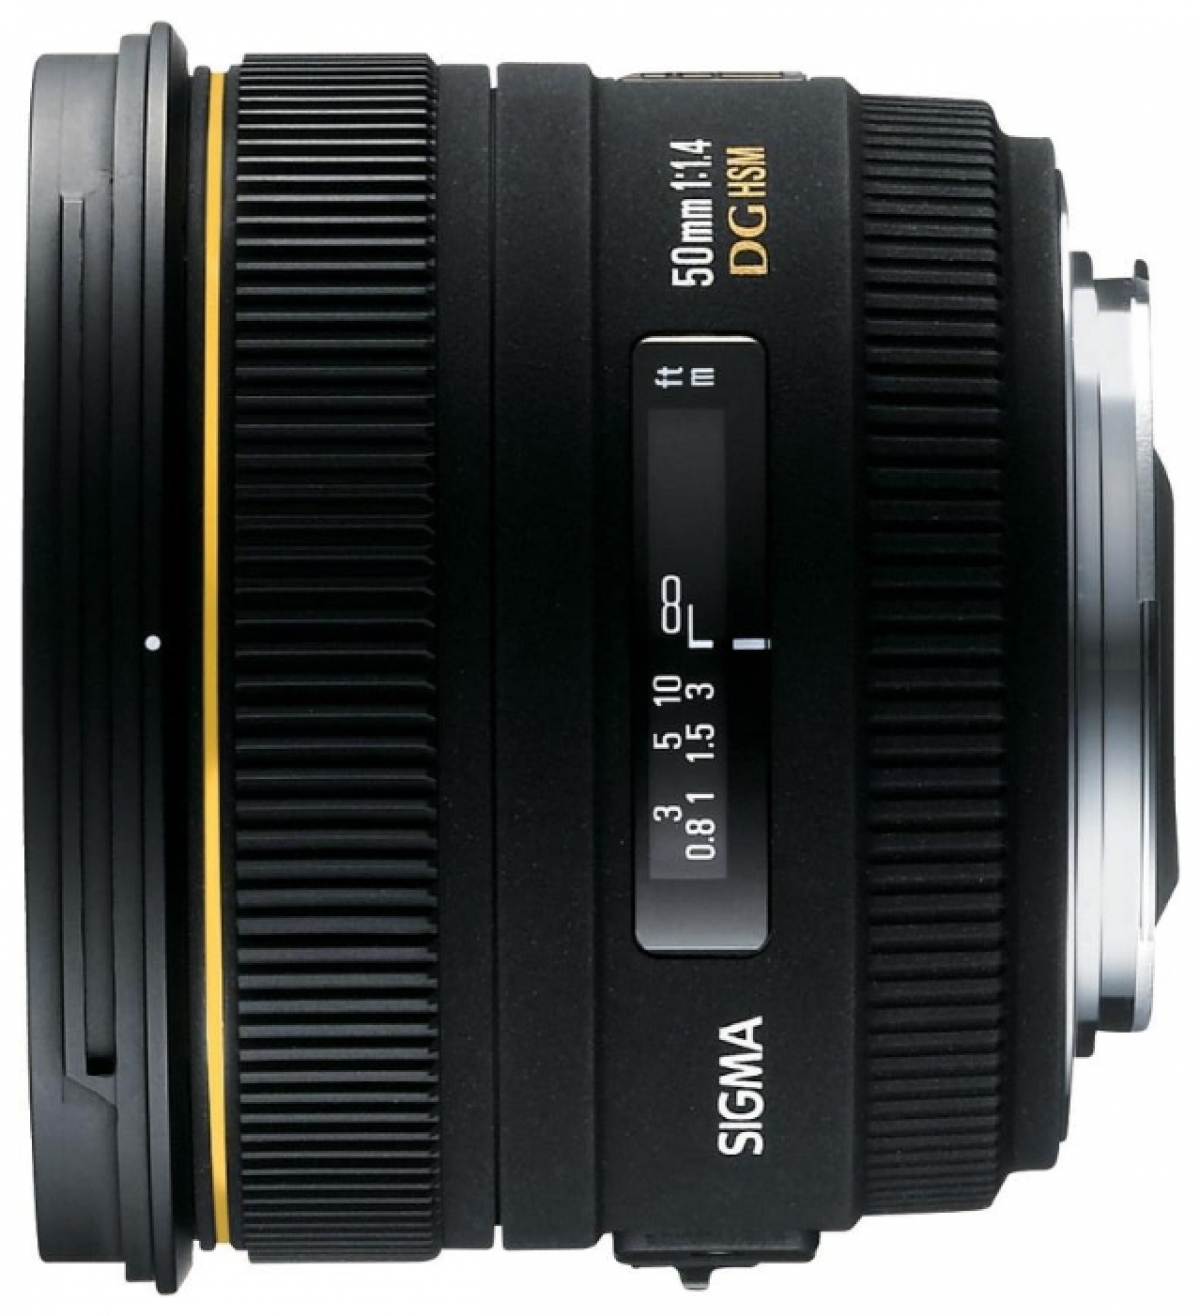 Sigma 50mm 1.4 dg hsm. Sigma 50mm 1.4 Canon. Sigma af 50mm f/1.4 ex. Sigma 50mm 1.4 ex DG HSM Canon. Sigma 50mm 1.4 Nikon.